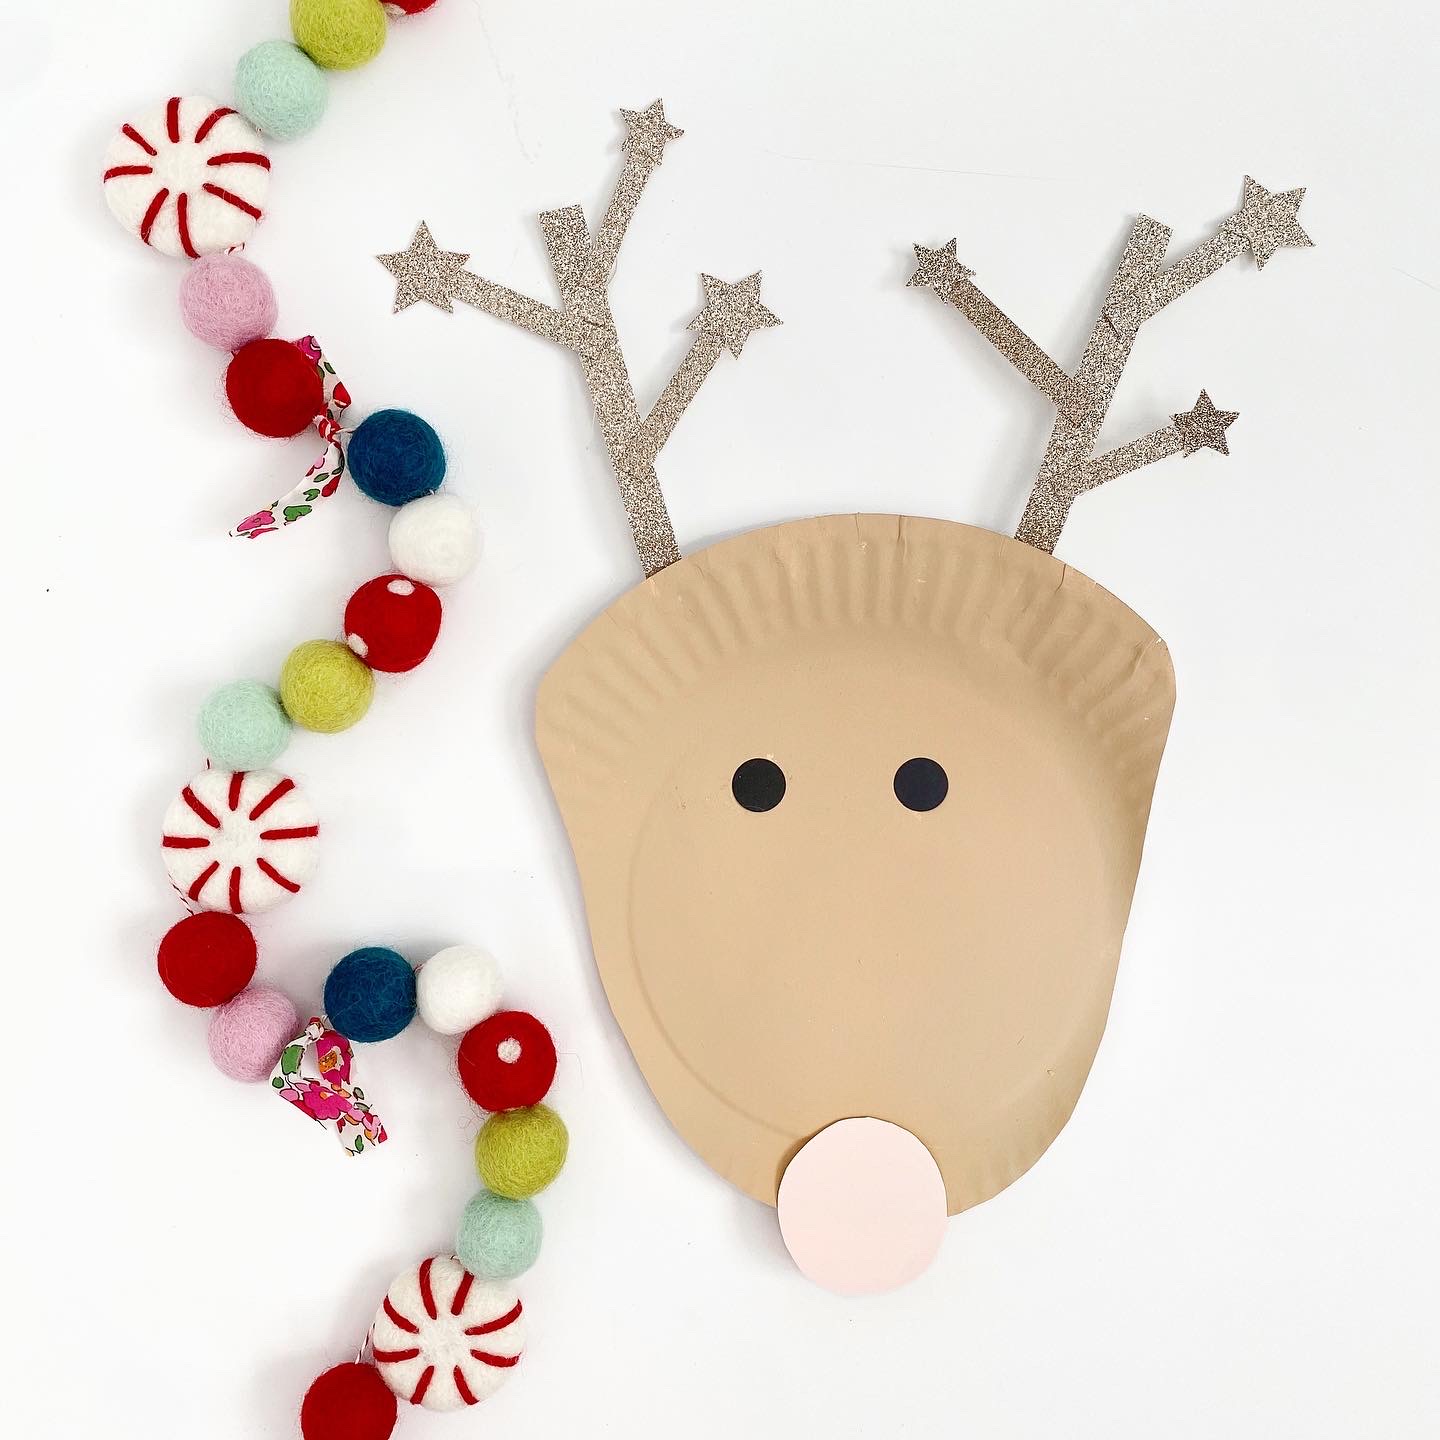 Christmas crafts kits for kids